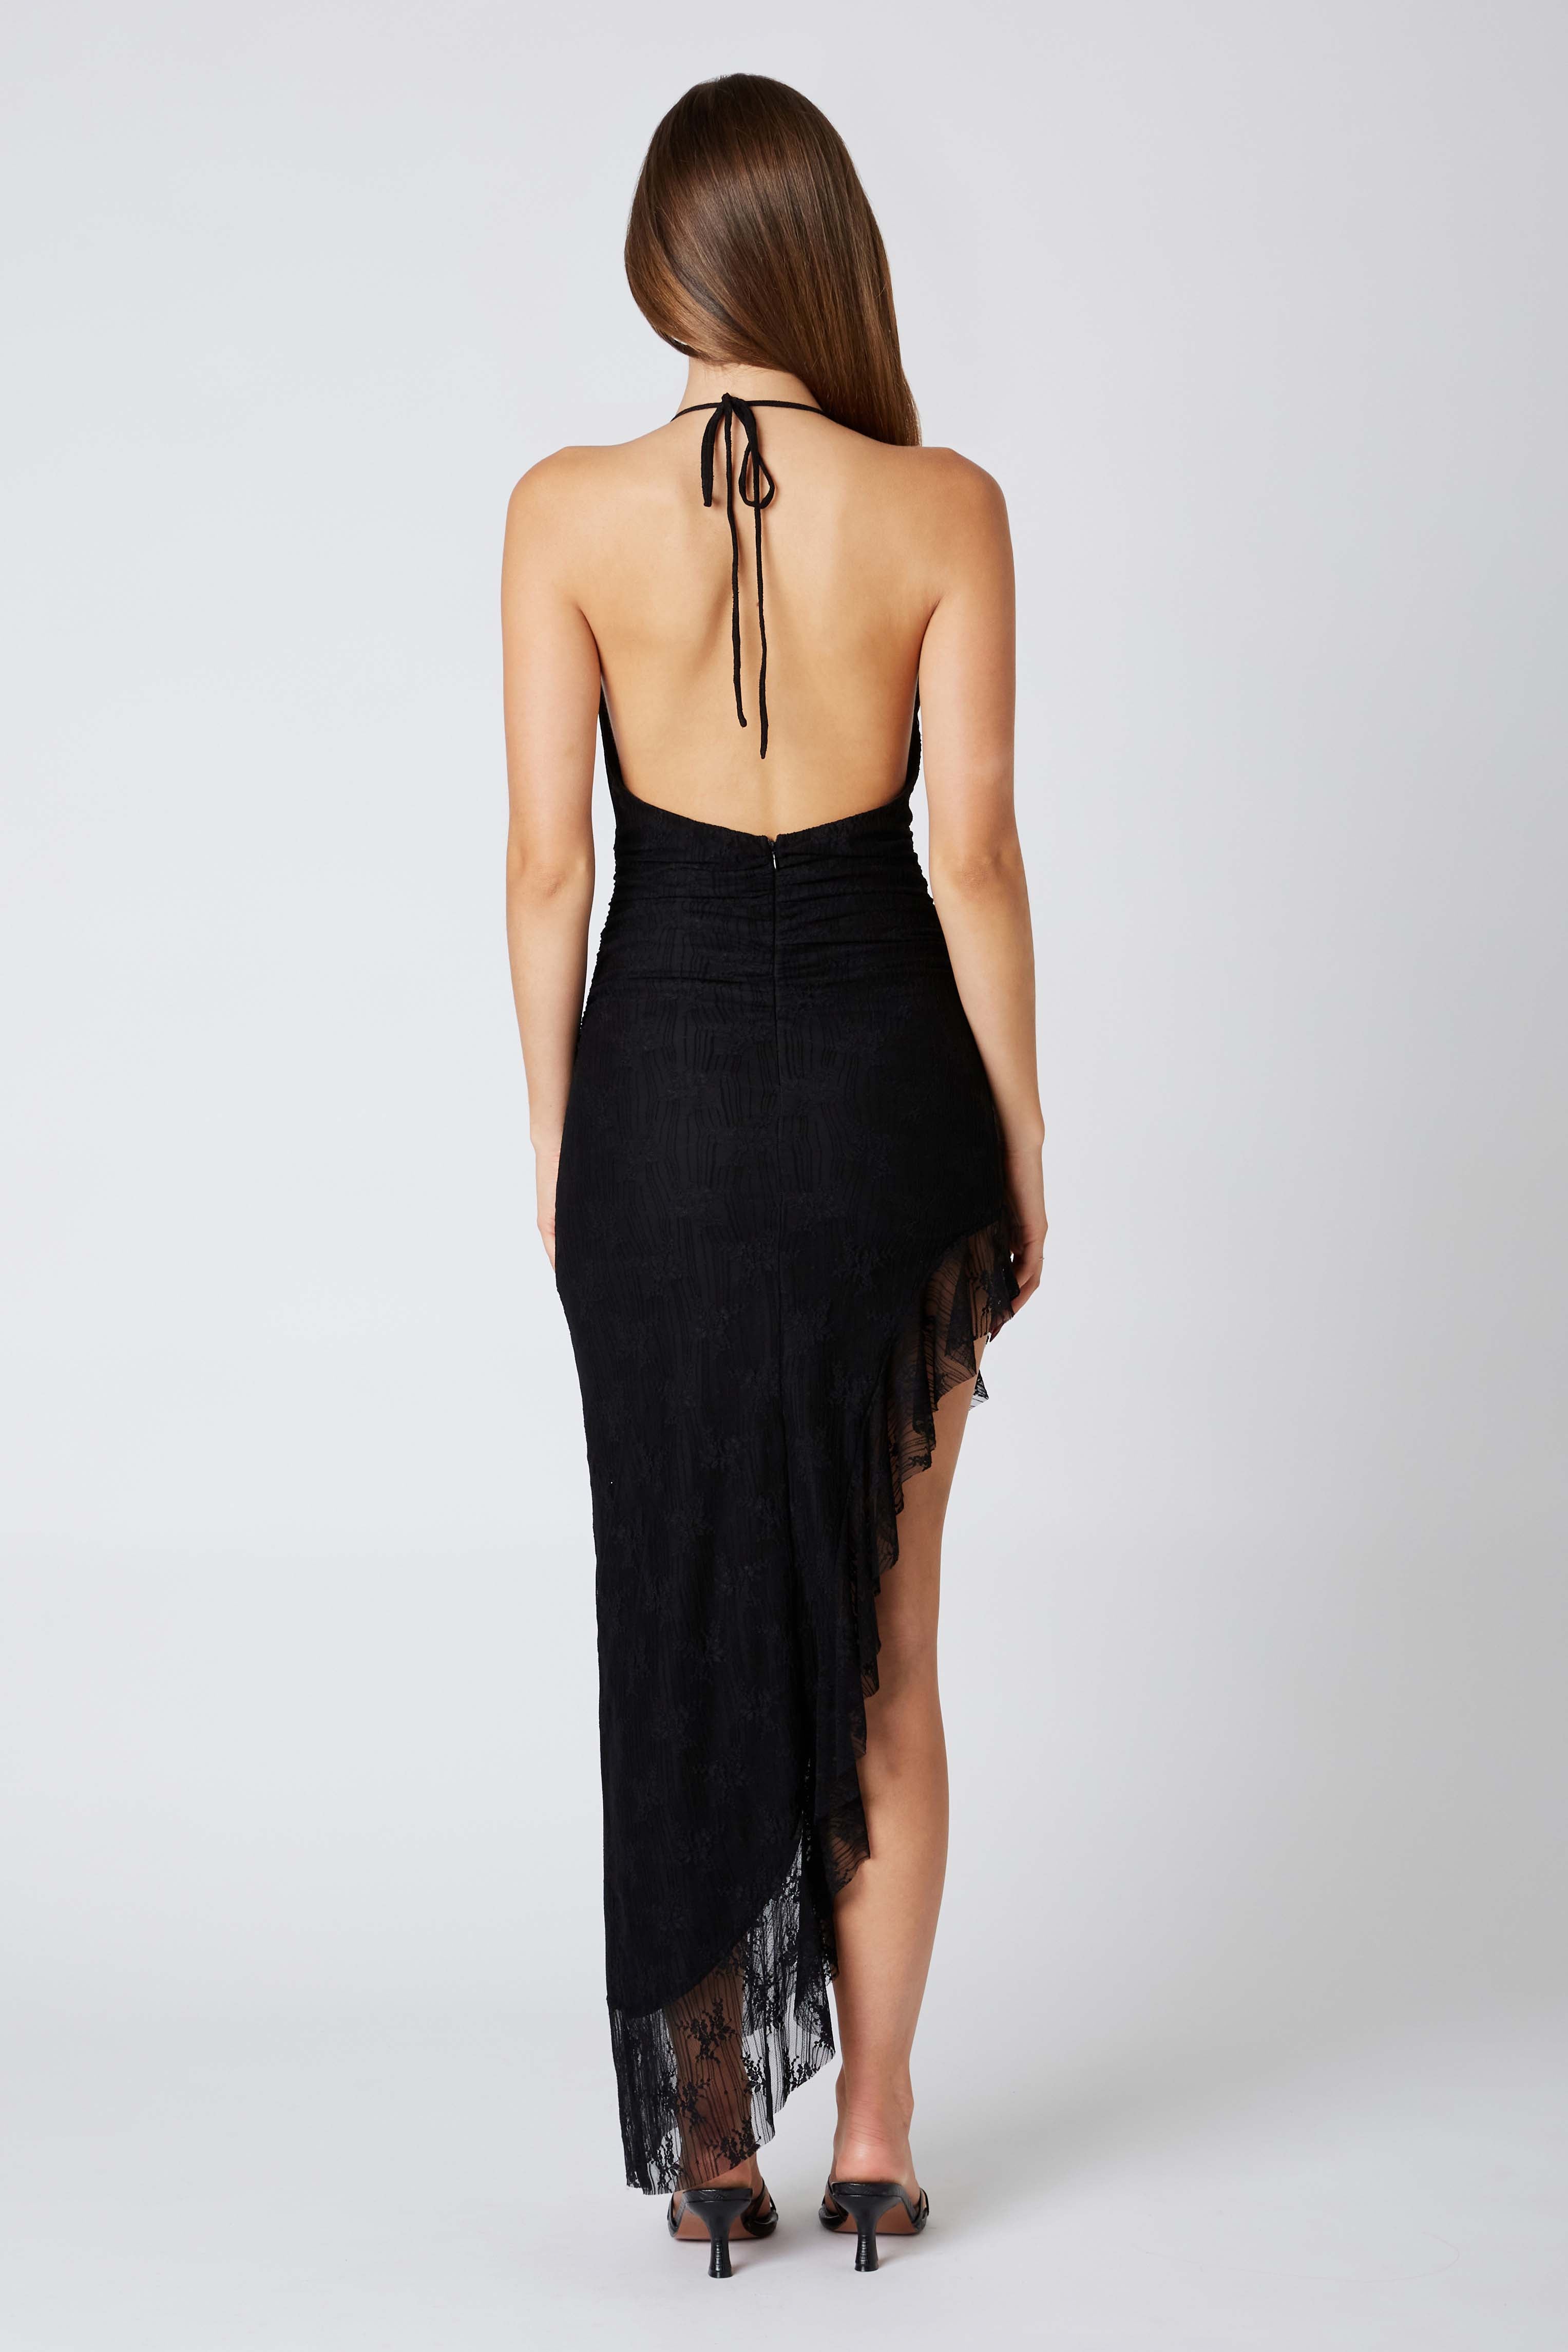 Lace Halter Asymmetrical Midi Dress in Black Back View